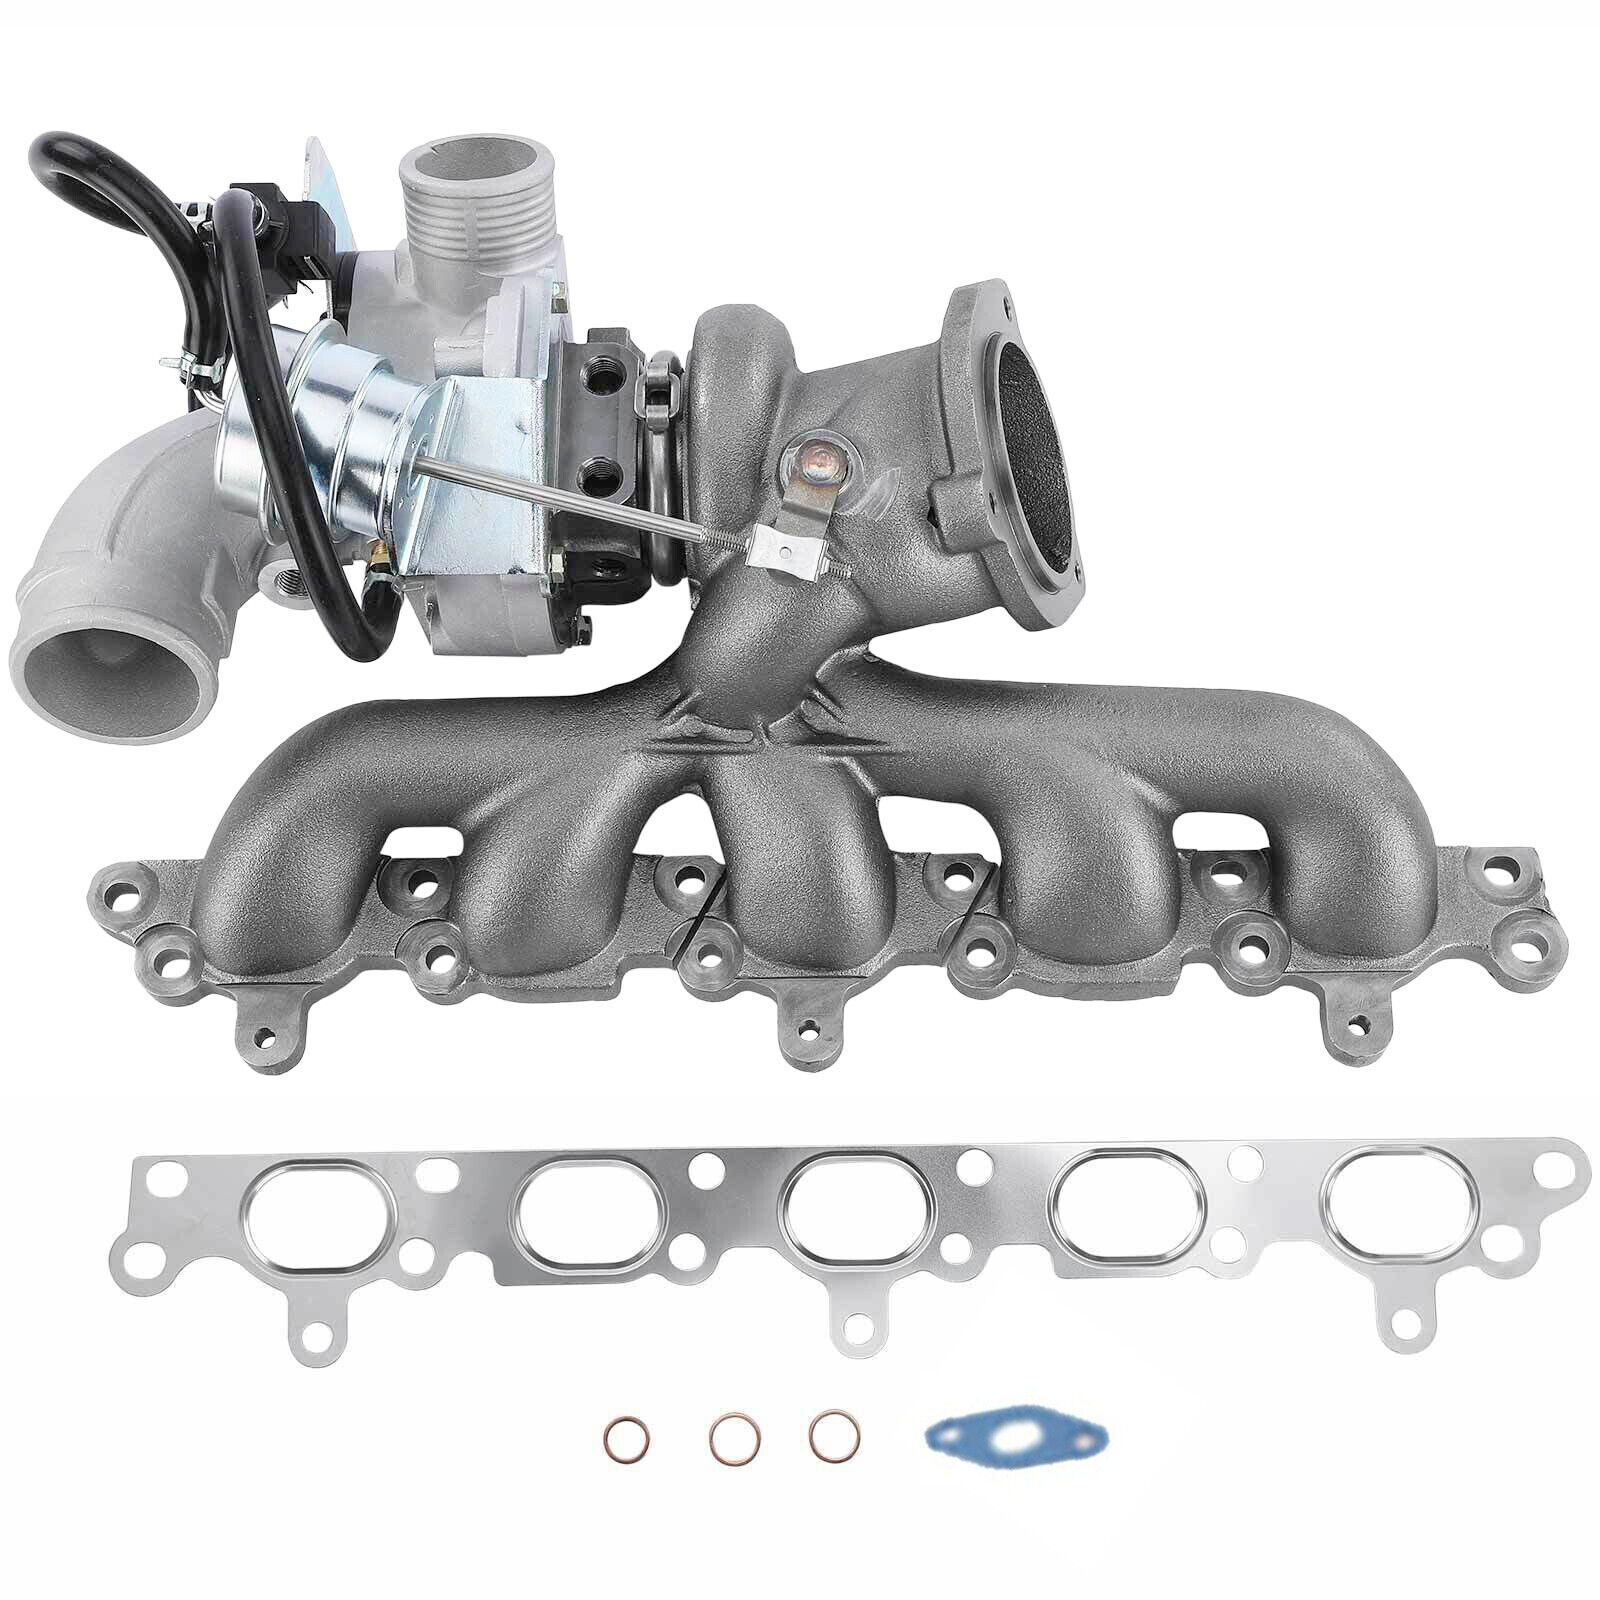 K04 Turbo Turbocharger w/ Exhaust Manifold Fits Volvo S40 C30 C70 V50 2.5L